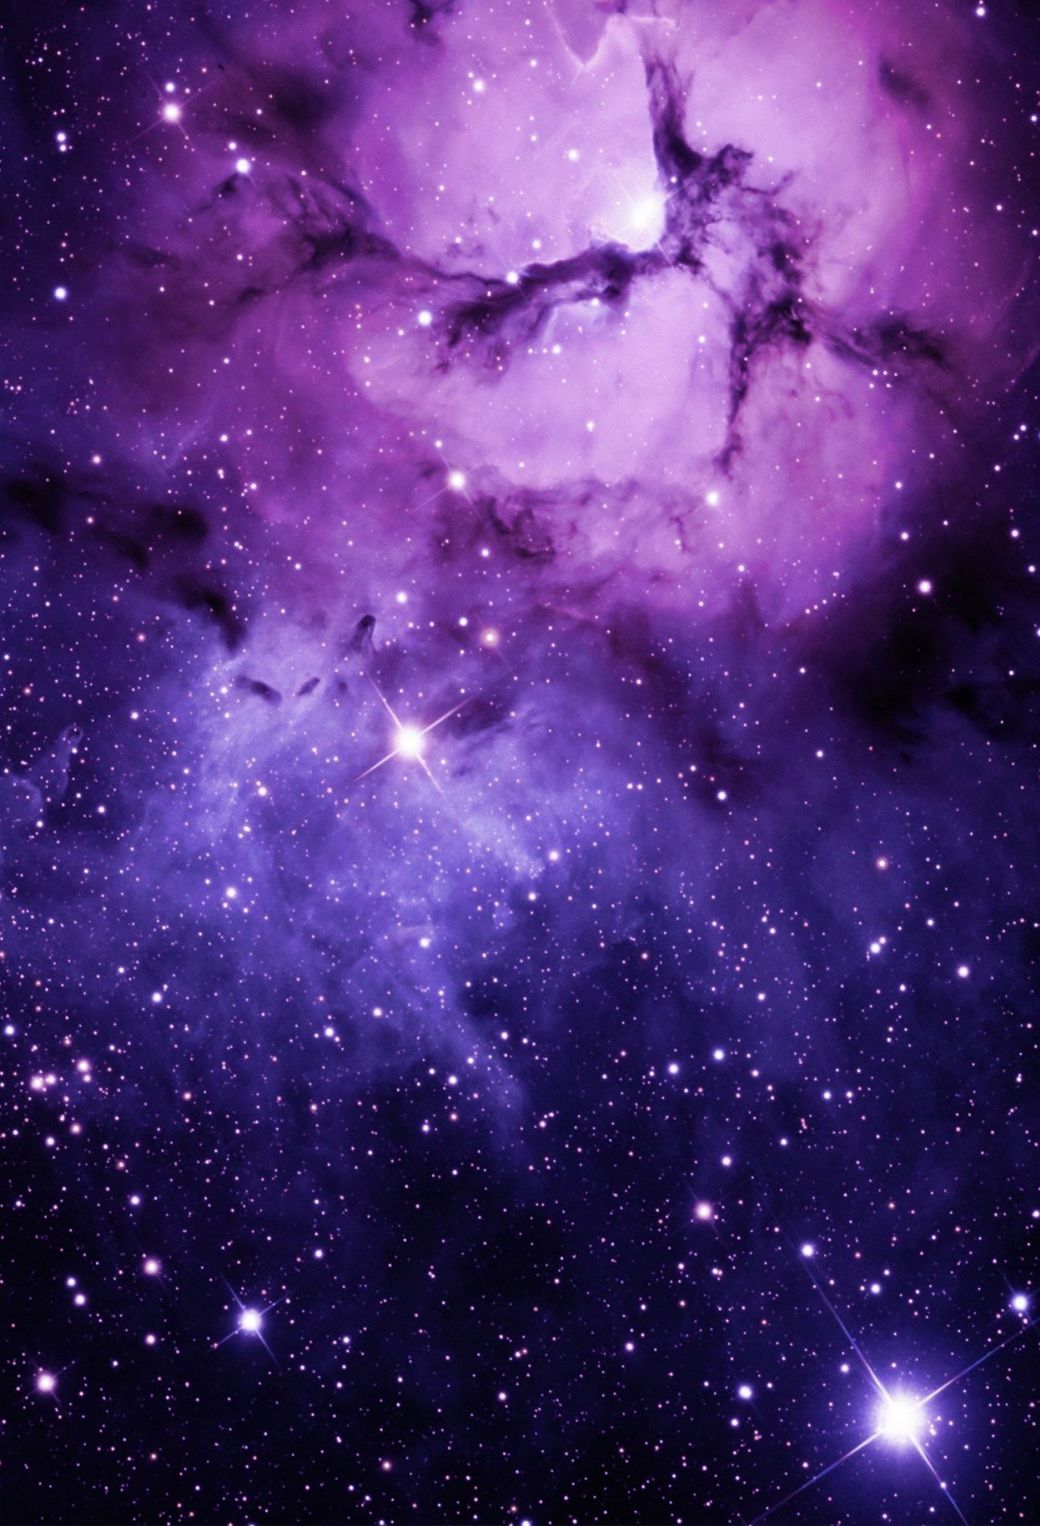 Aesthetic Purple Galaxy Wallpapers